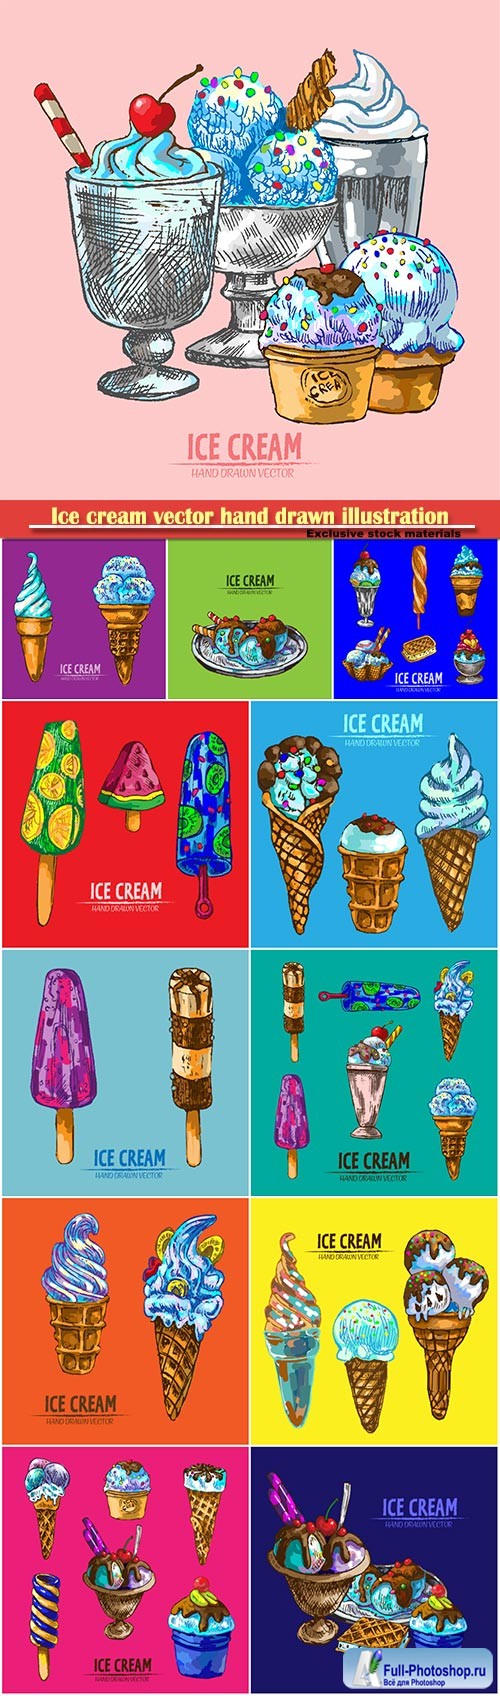 Ice cream vector hand drawn retro illustration collection set